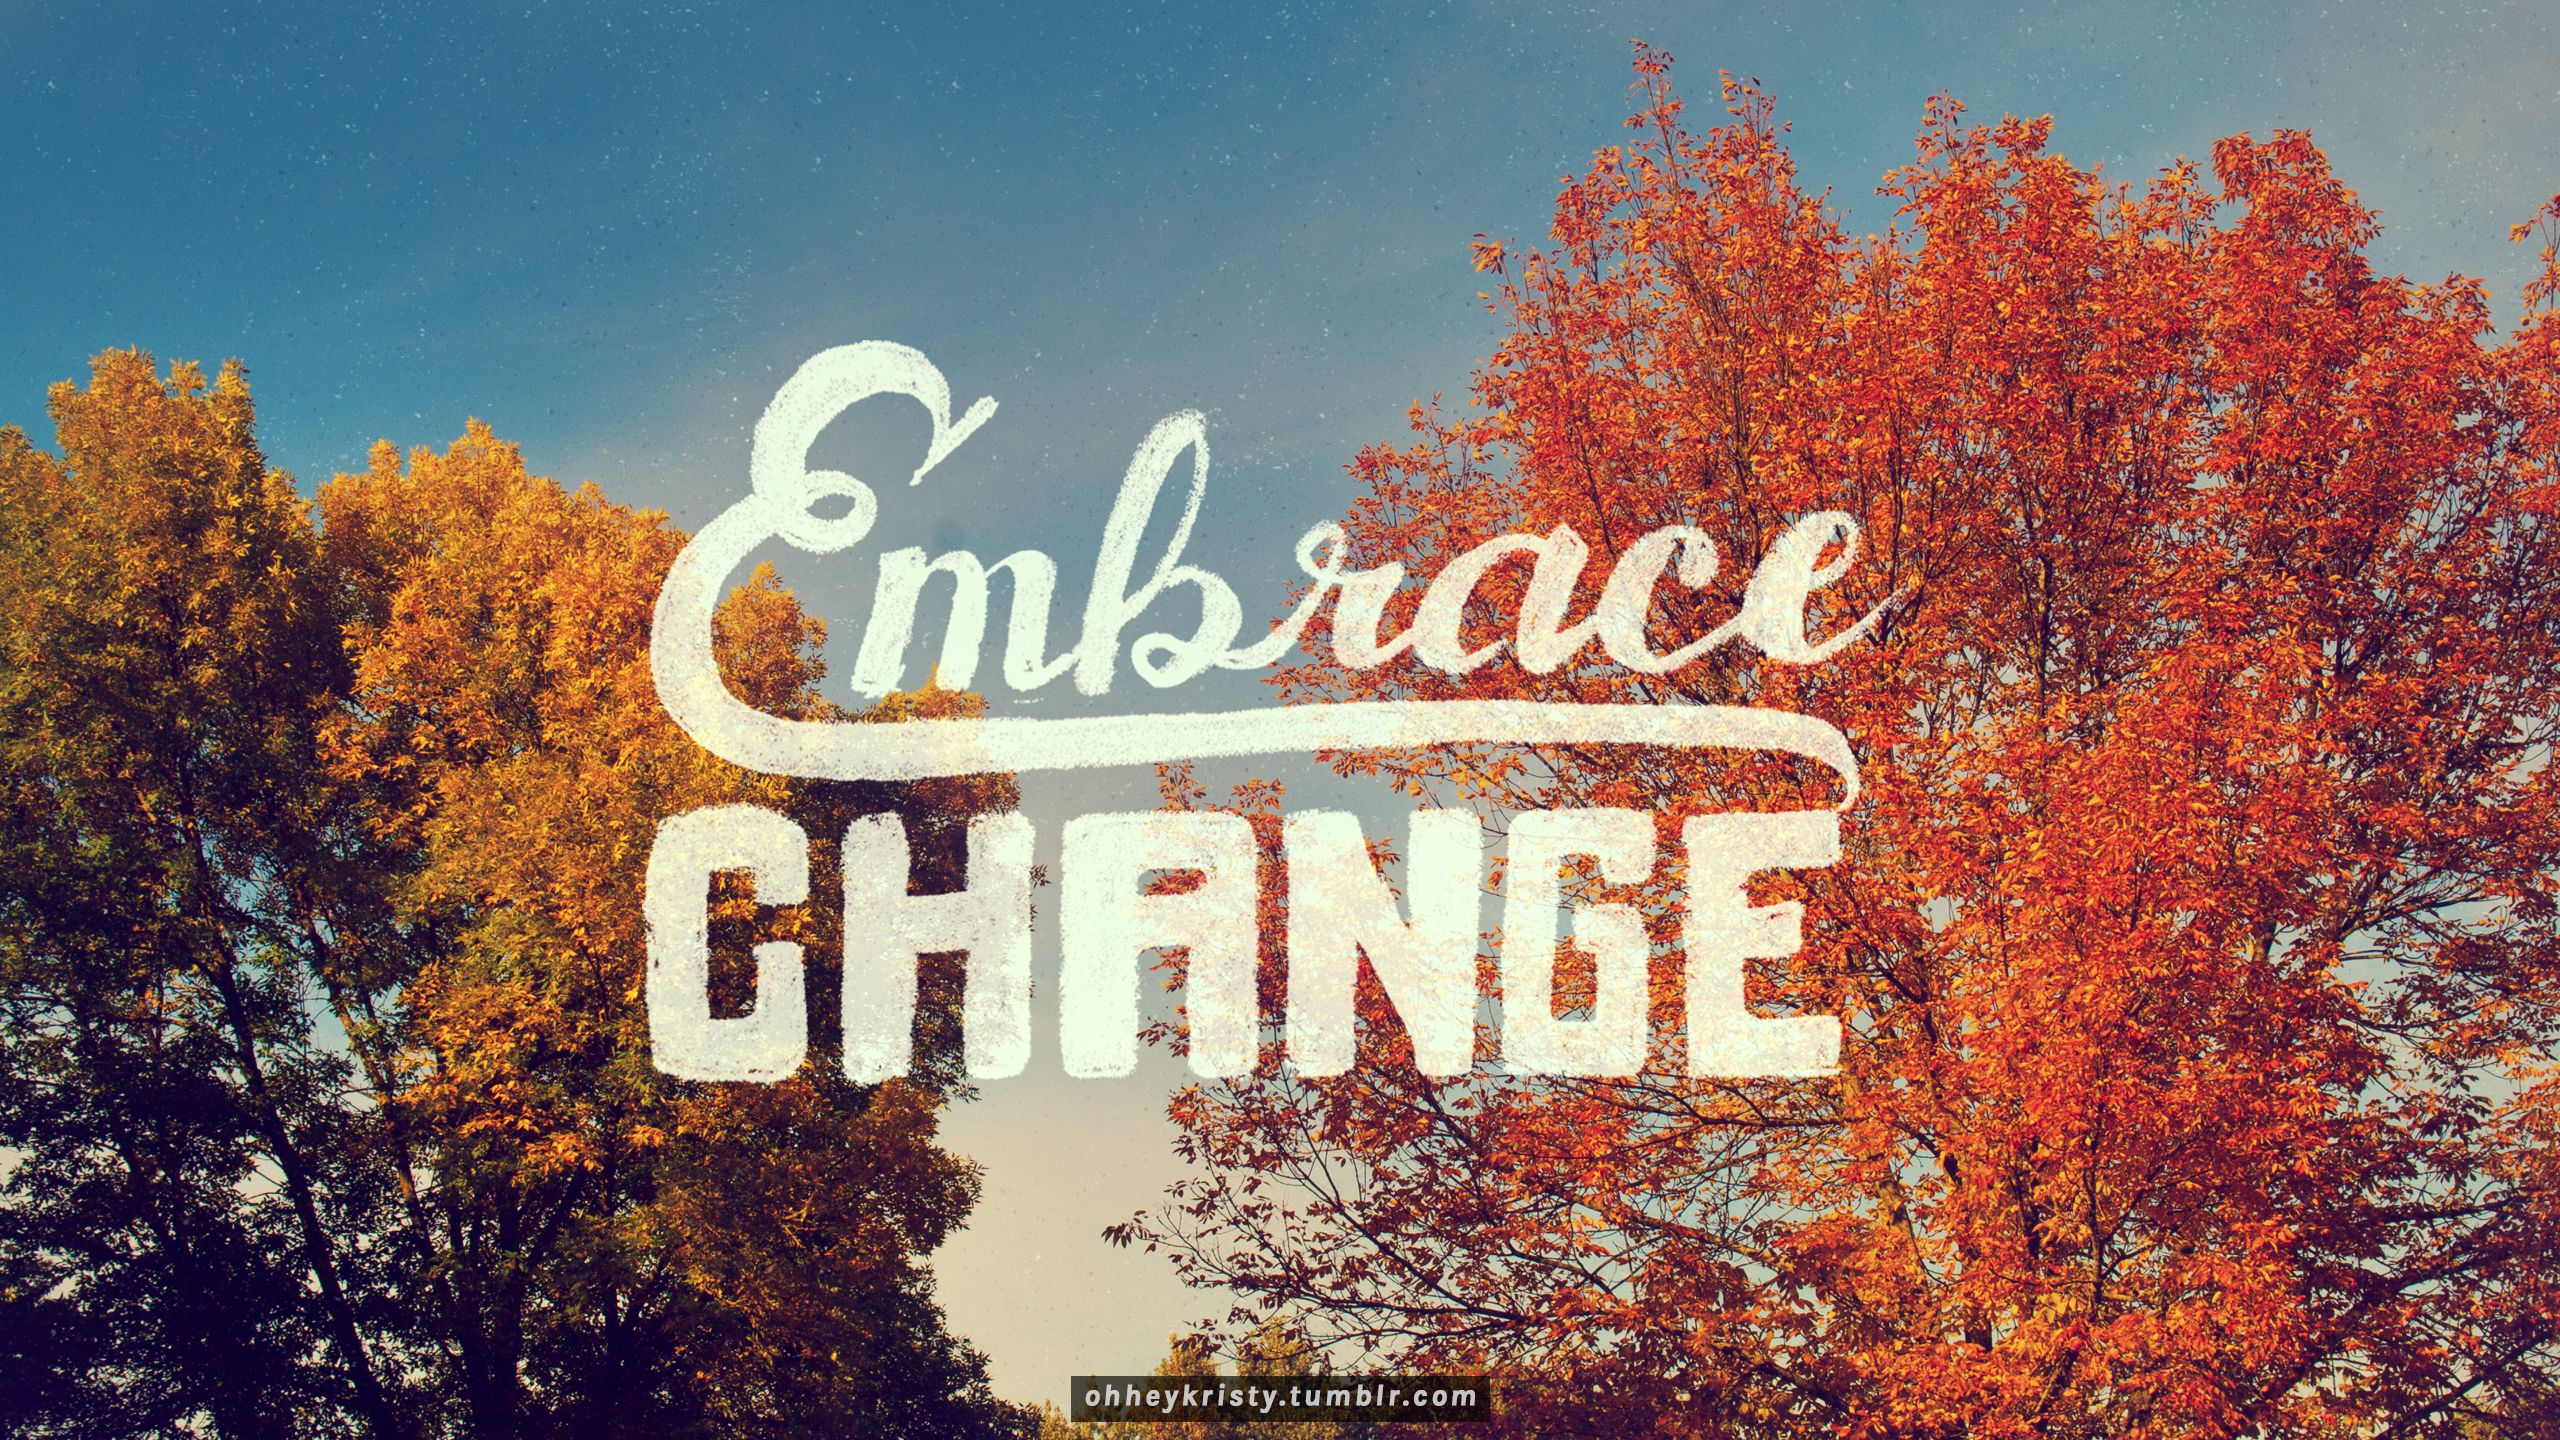 Embrace Change Wallpaper. Full Metal Alchemist Equivalent Exchange Wallpaper, Change Wallpaper and Auto Change Wallpaper Vista